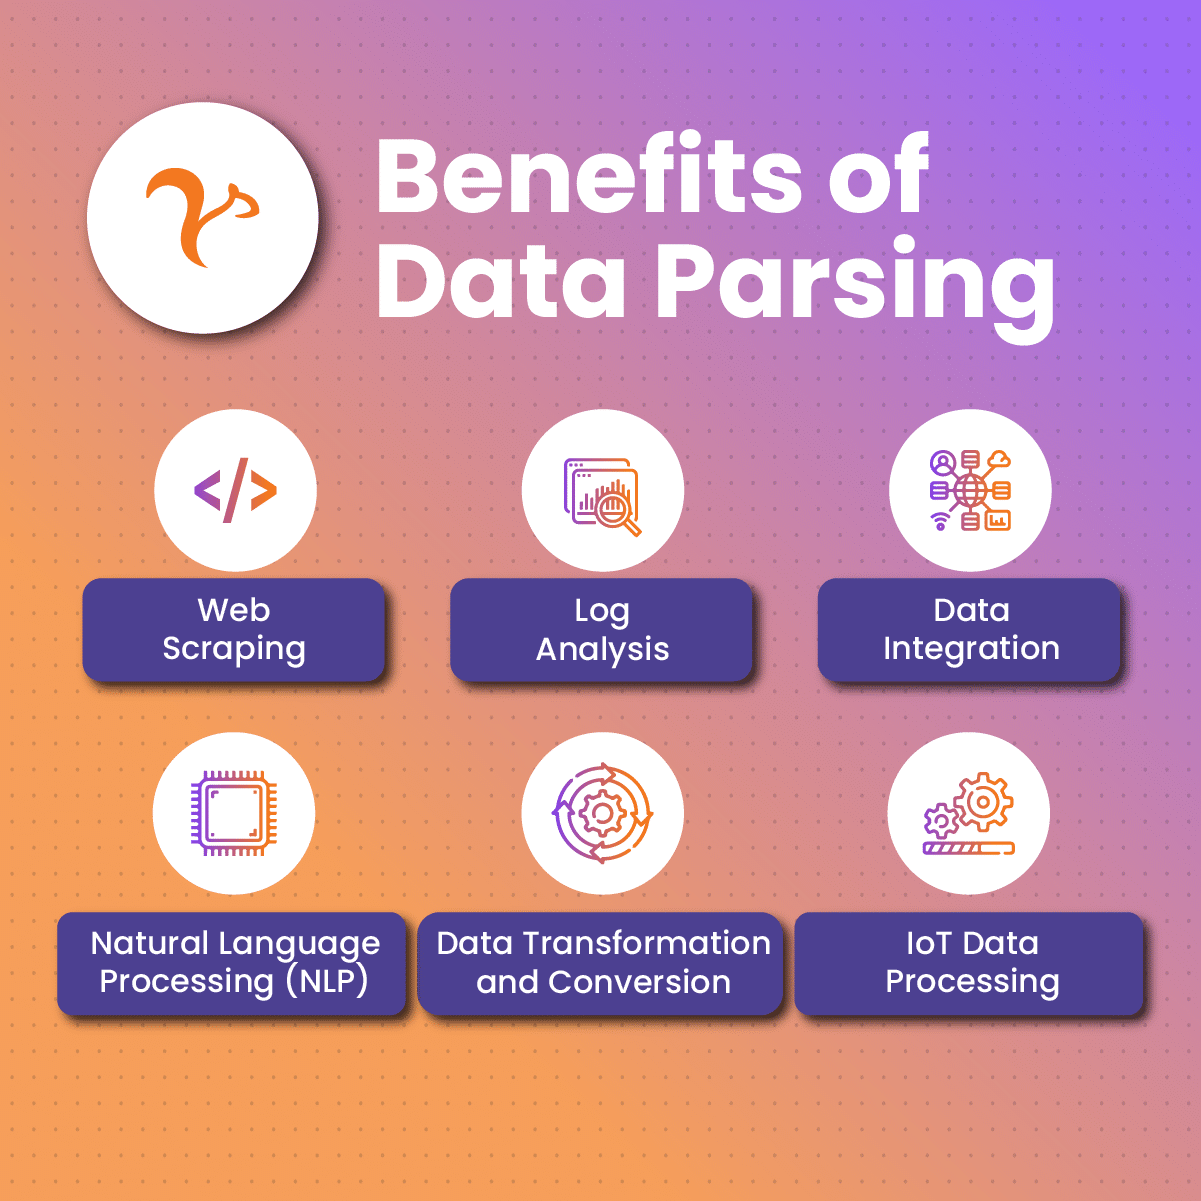 Benefits of Data Parsing